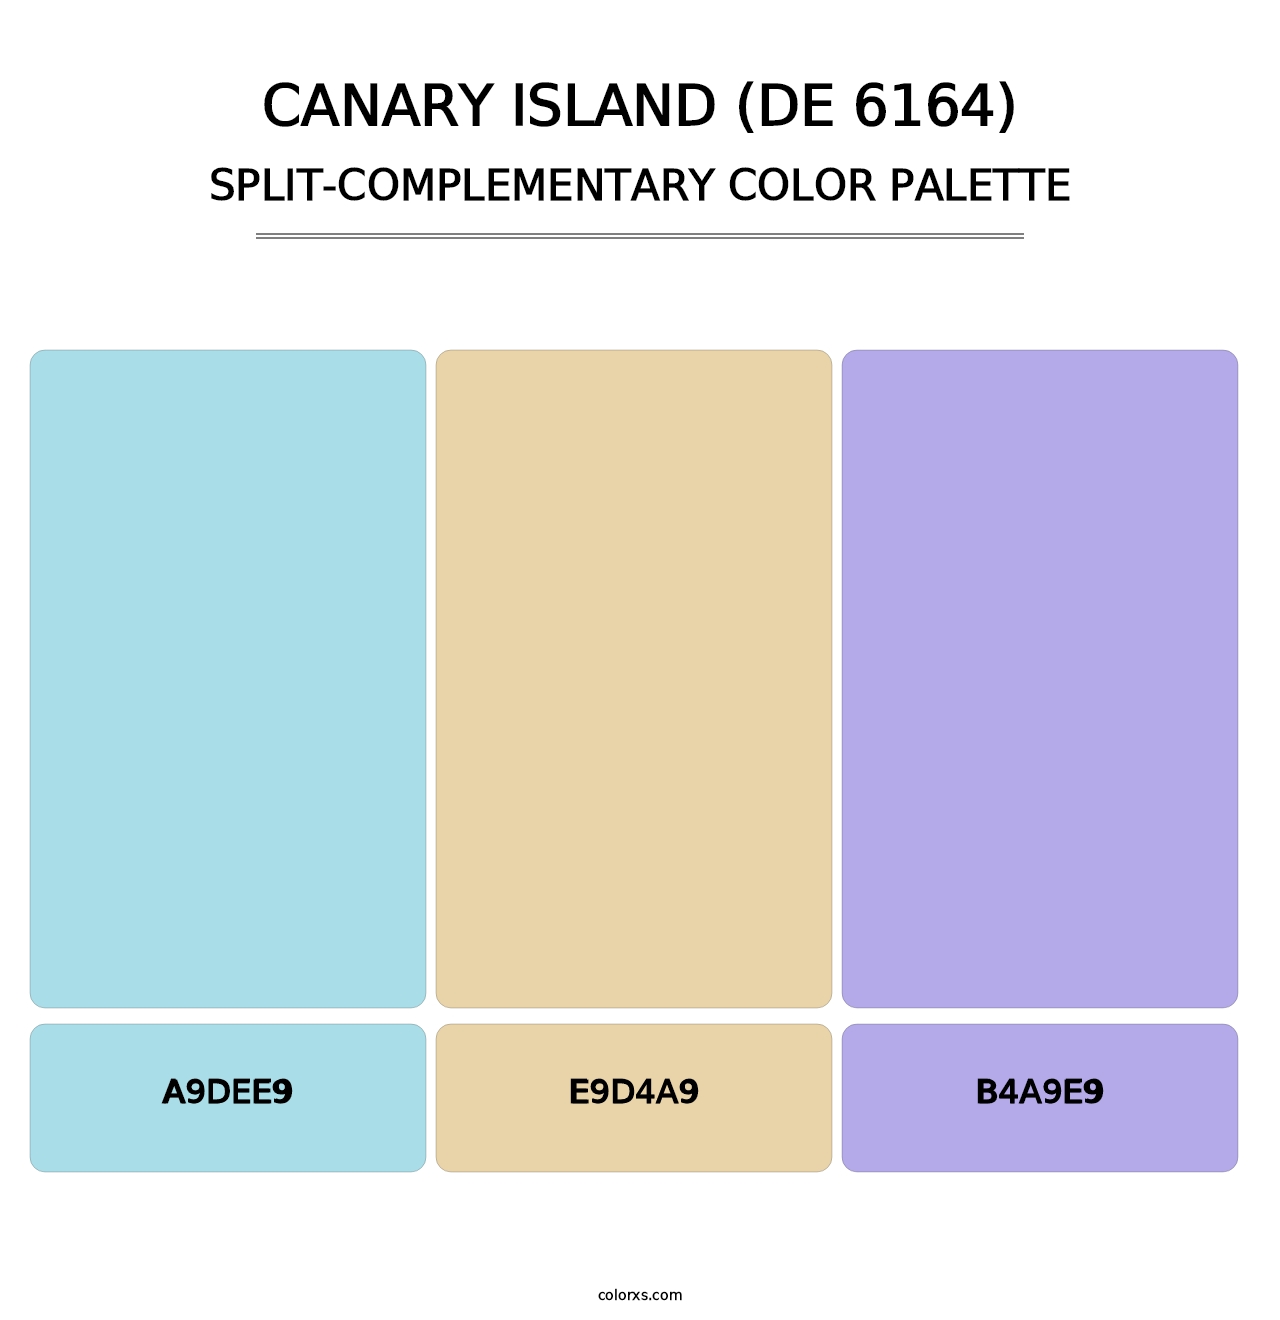 Canary Island (DE 6164) - Split-Complementary Color Palette